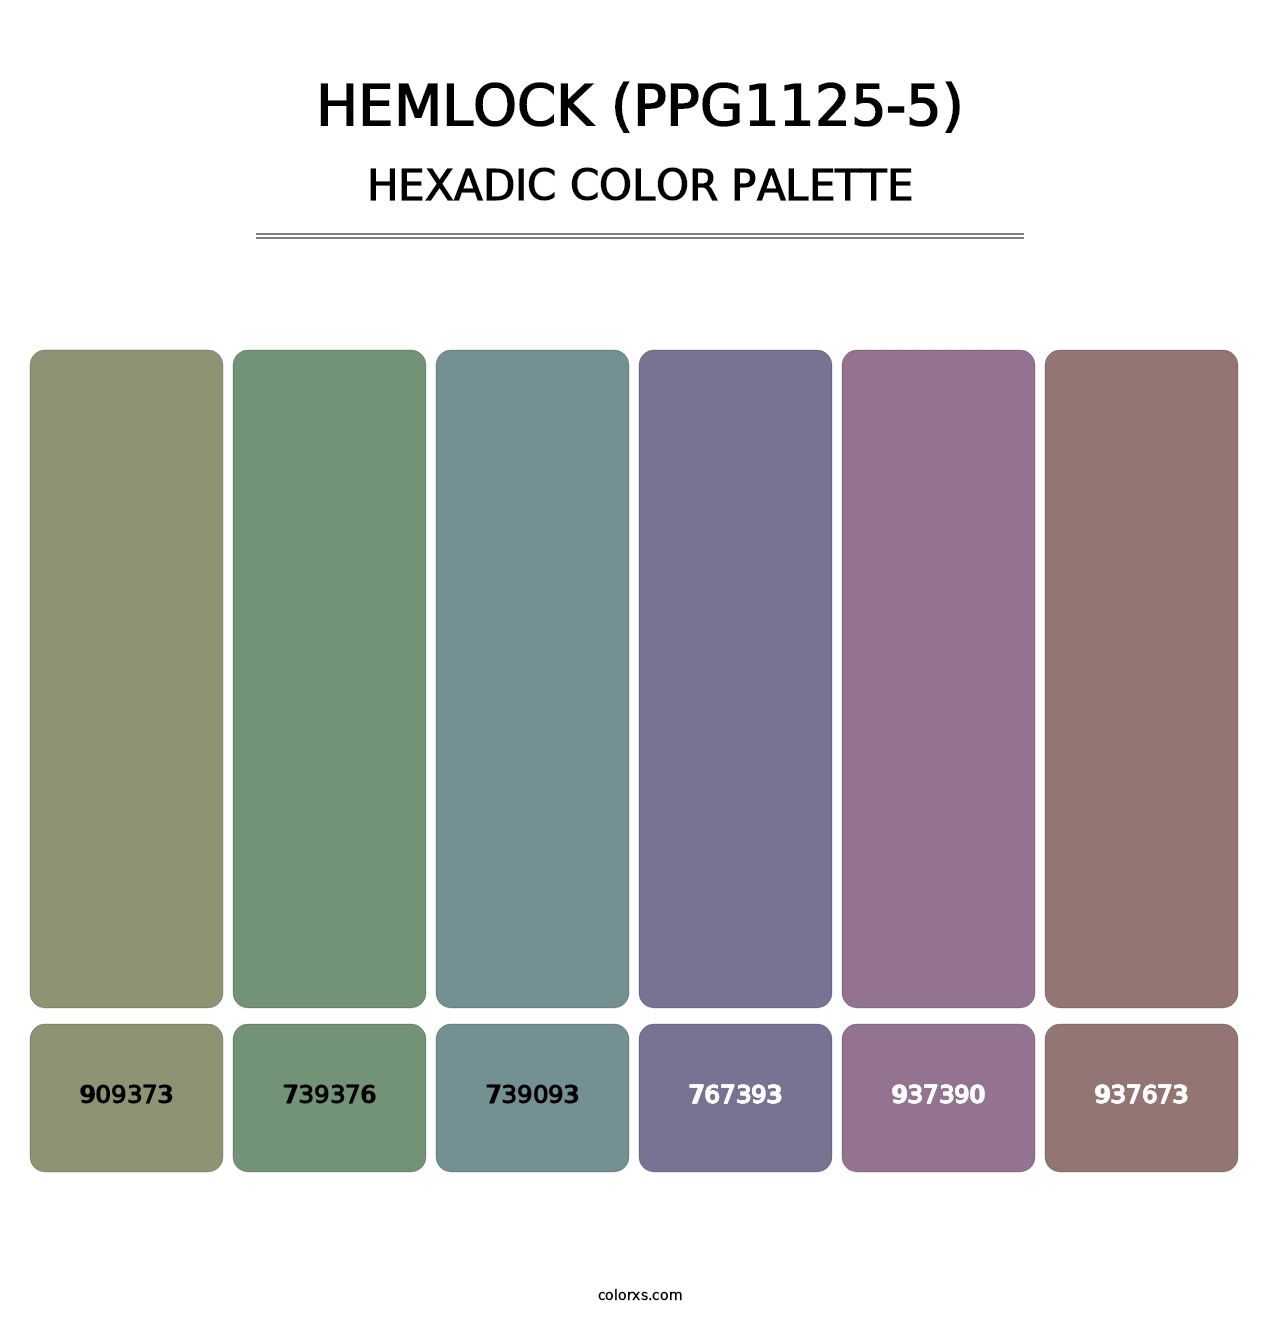 Hemlock (PPG1125-5) - Hexadic Color Palette